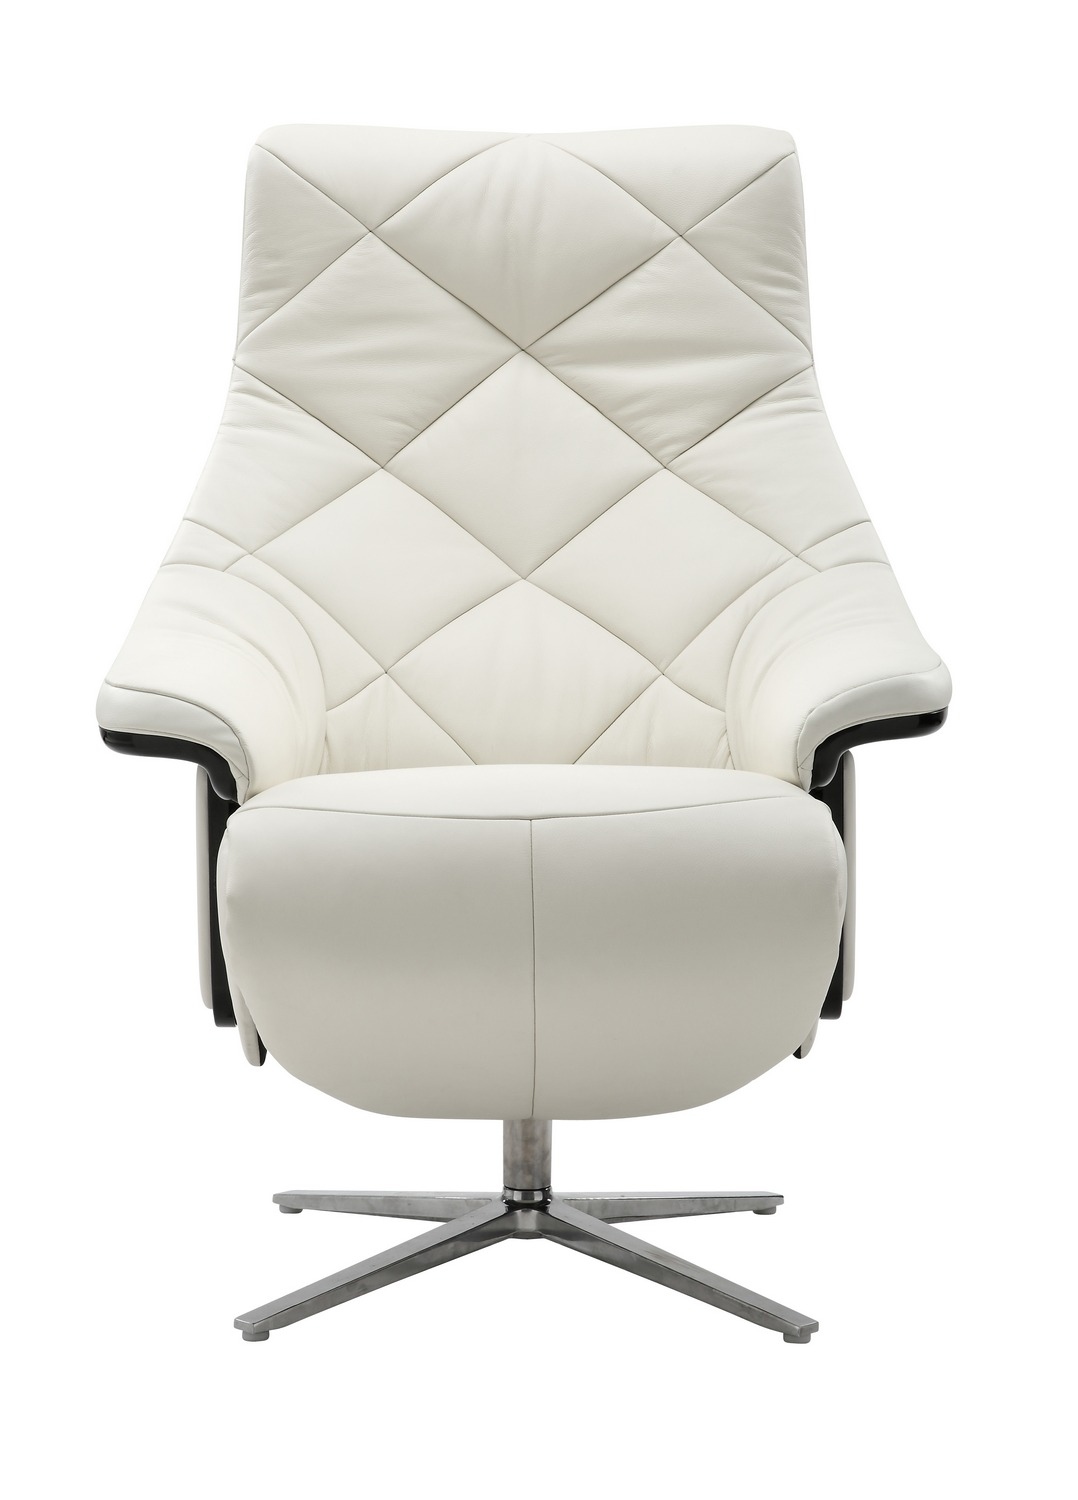 Barcalounger Luna Power Pedestal Recliner Chair - Capri White/Leather Match